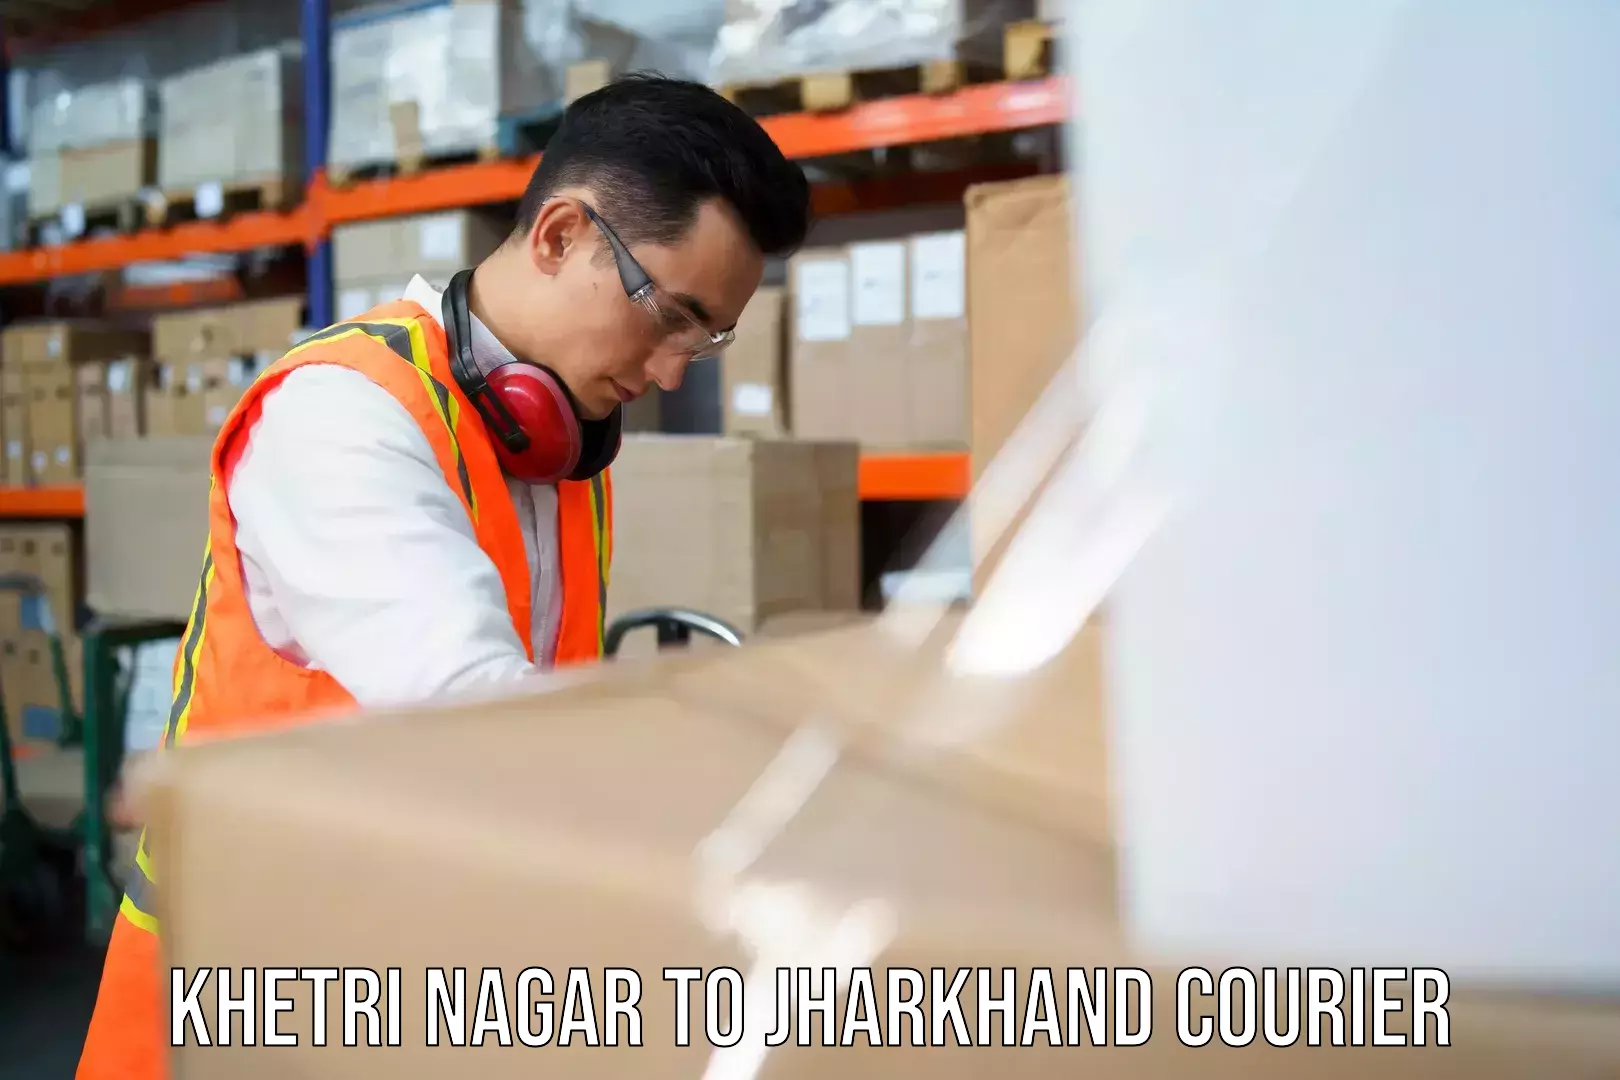 Professional courier handling Khetri Nagar to Padma Hazaribagh